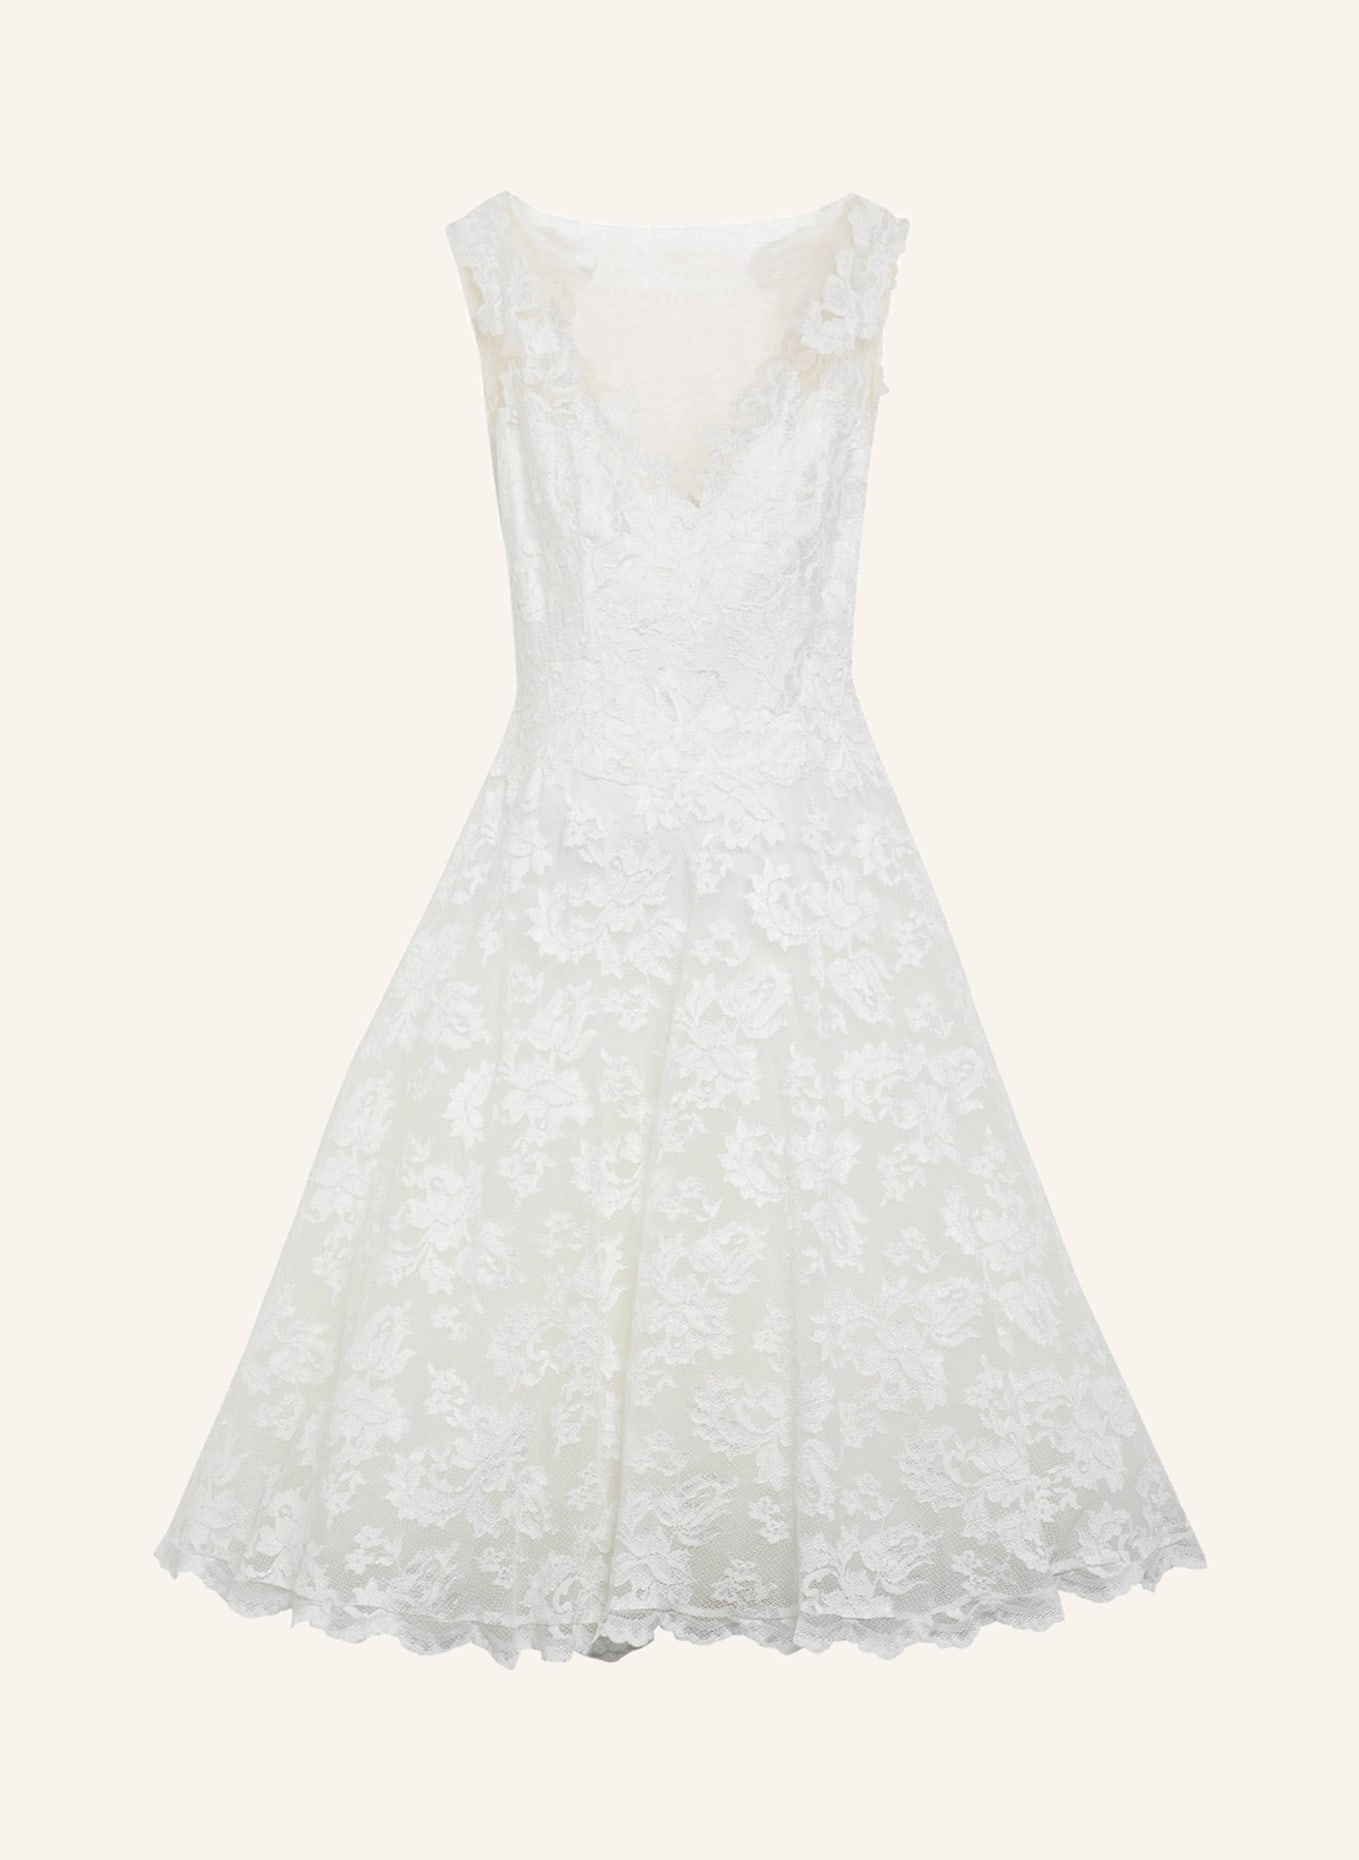 OLVI'S Cocktail dress with lace trim, Color: WHITE (Image 1)